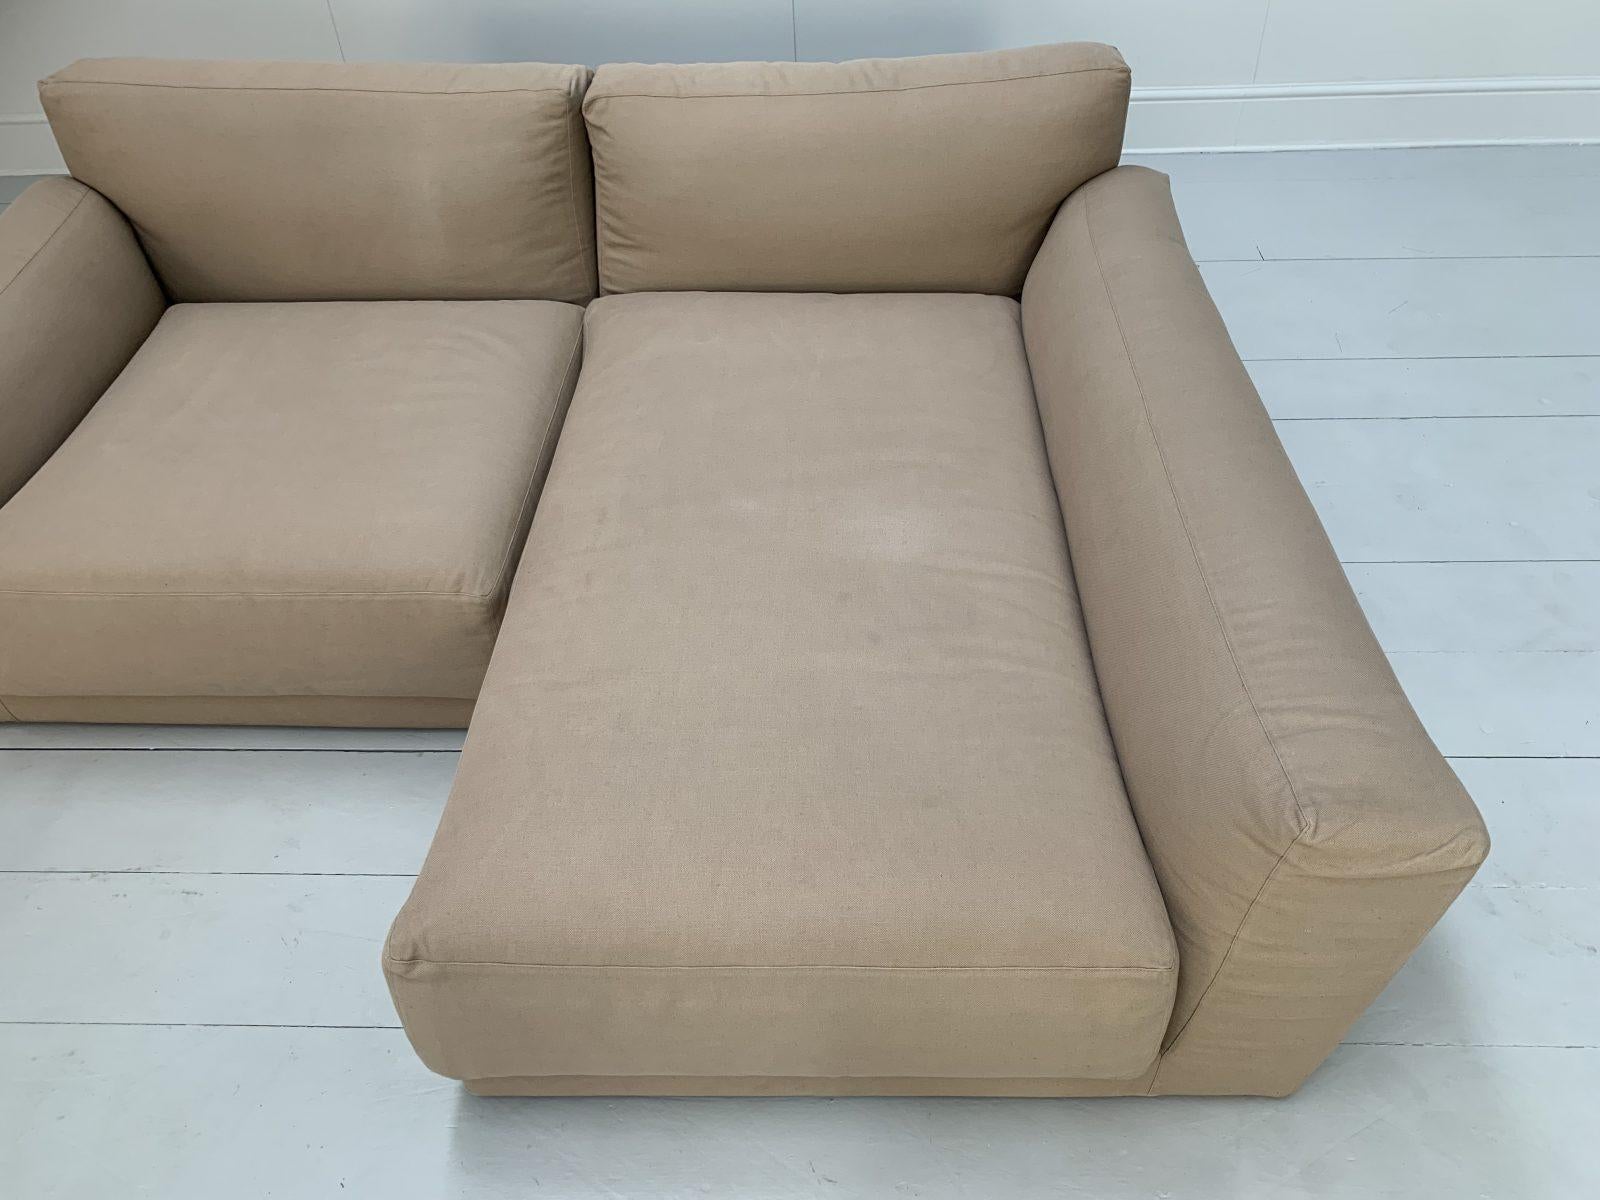 B&B Italia “Luis” 3-Seat Compact L-Shape Sofa – In “Ellade” Linen For Sale 6